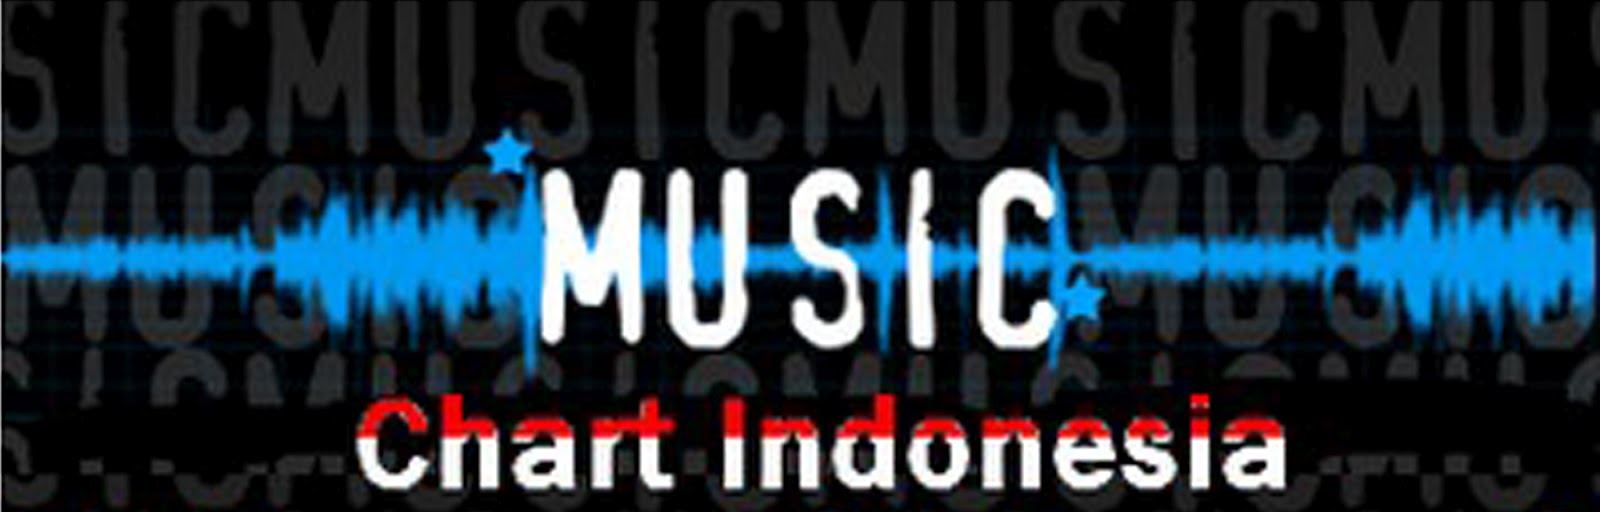 Lagu Indonesia Terbaru Bulan Agustus 2013